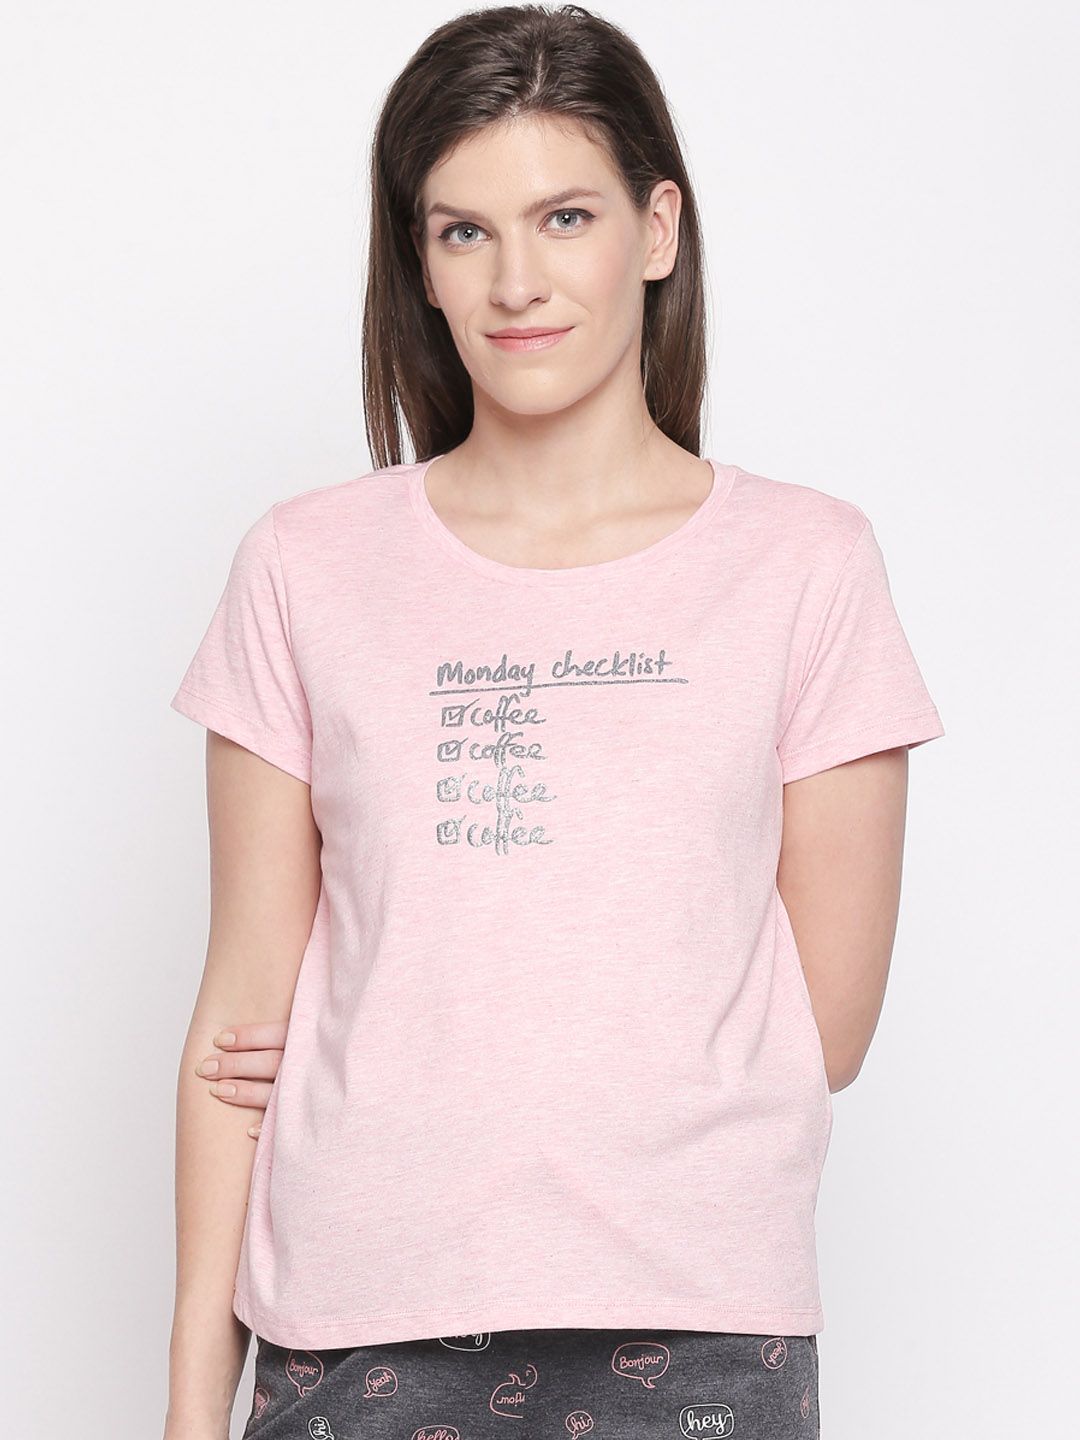 Dreamz by Pantaloons Women Pink Printed Lounge tshirt Price in India